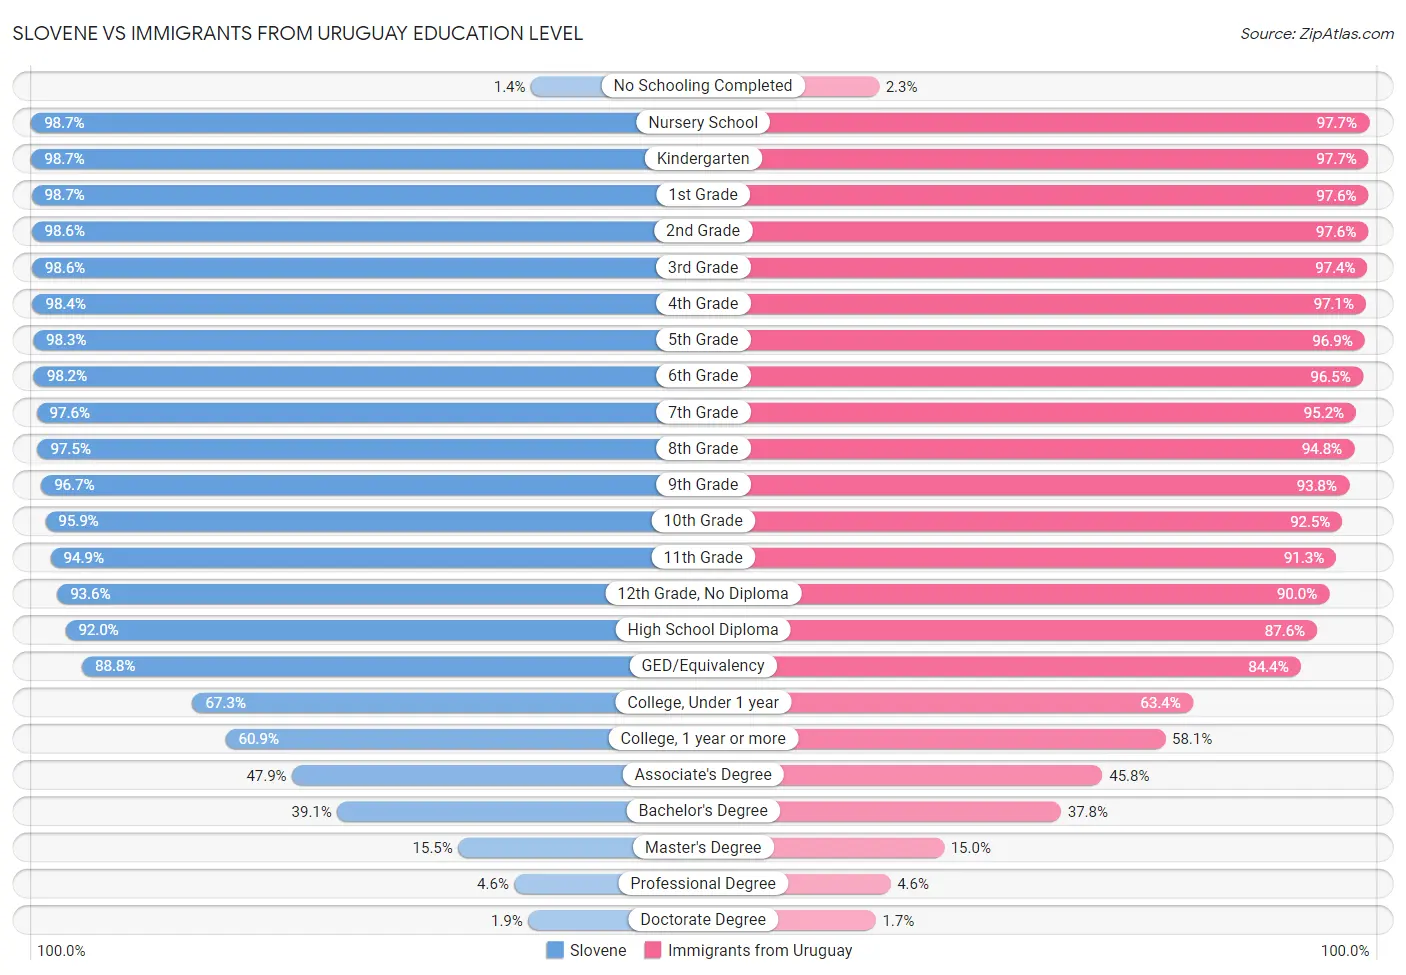 Slovene vs Immigrants from Uruguay Education Level